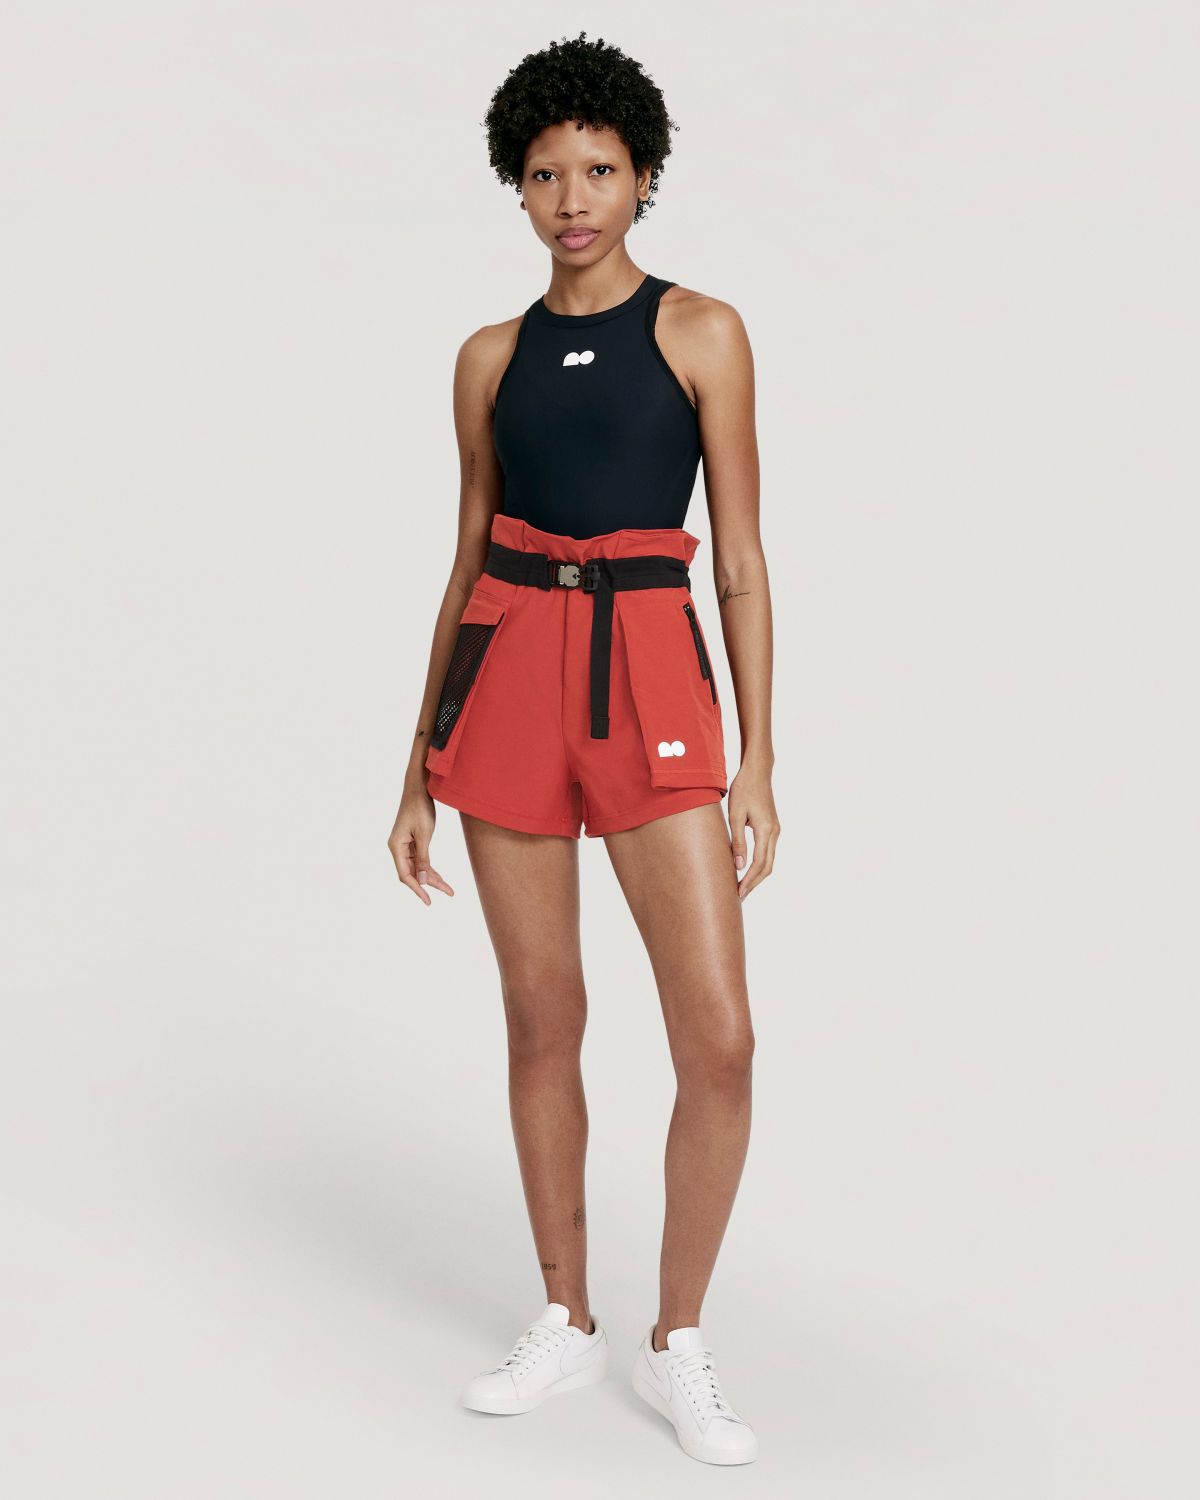 Naomi Osaka’s Second Nike Apparel Collection [Detailed Photos]